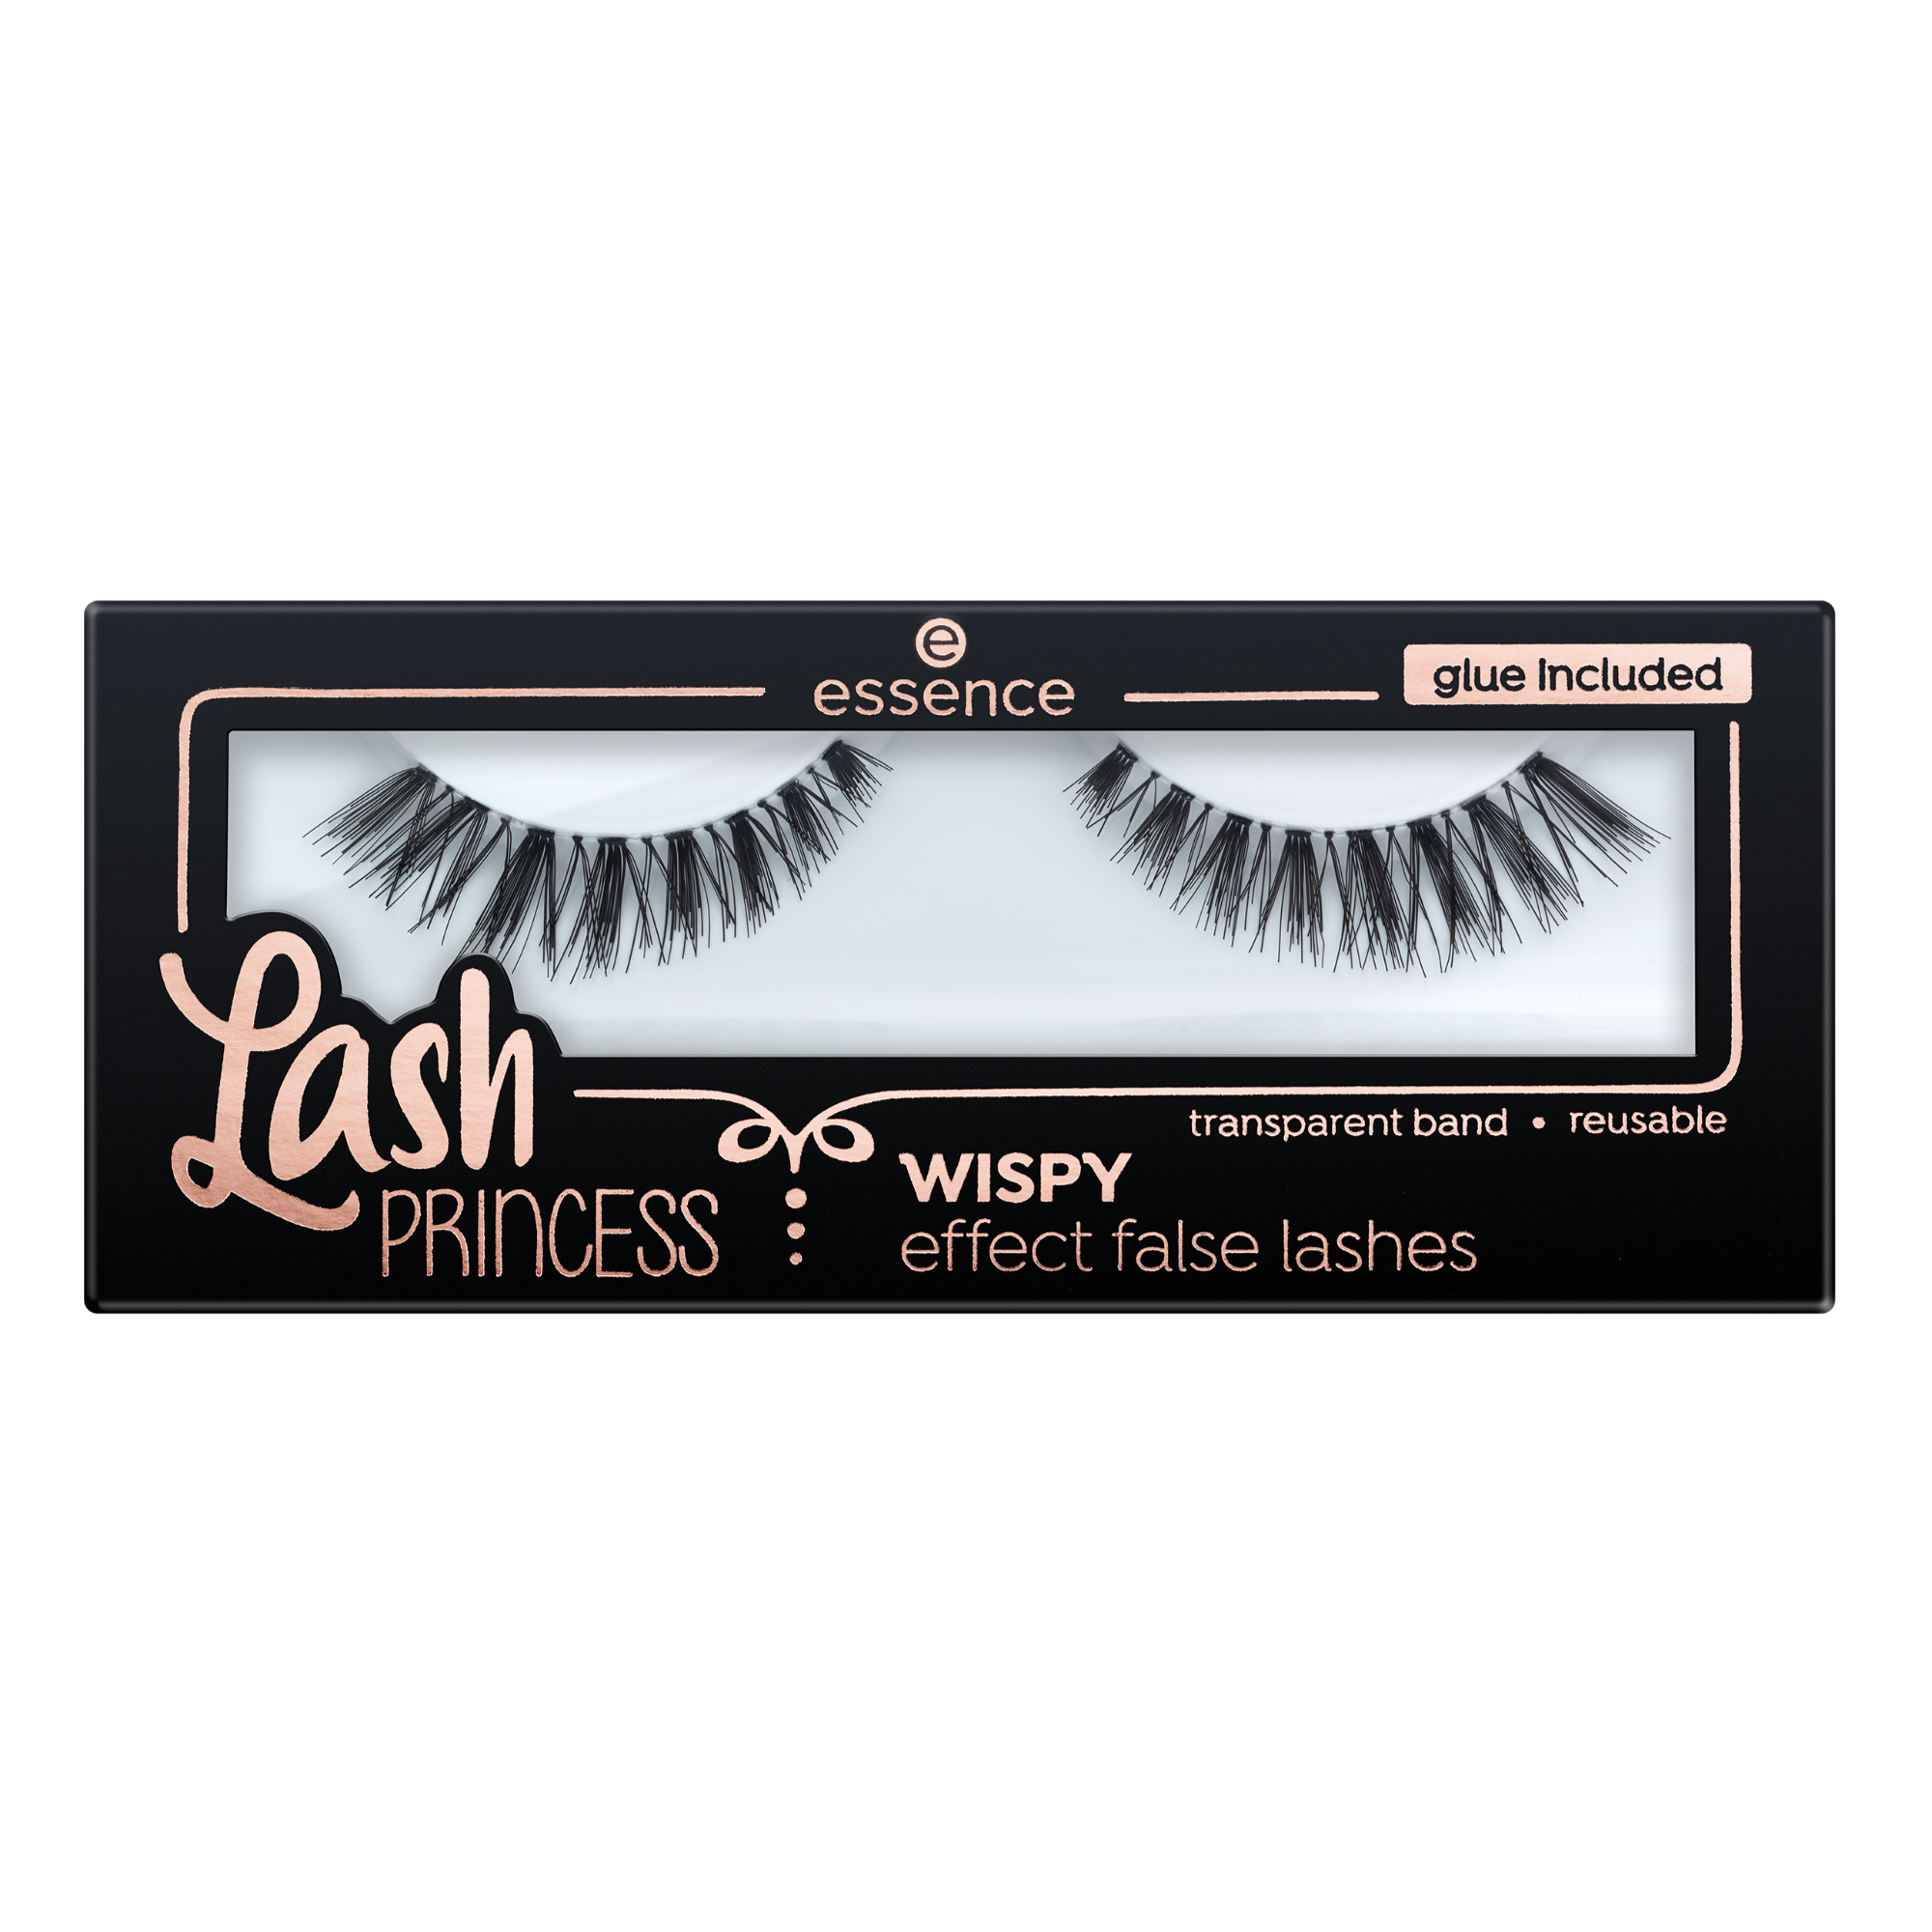 Lash PRINCESS WISPY effect false lashes